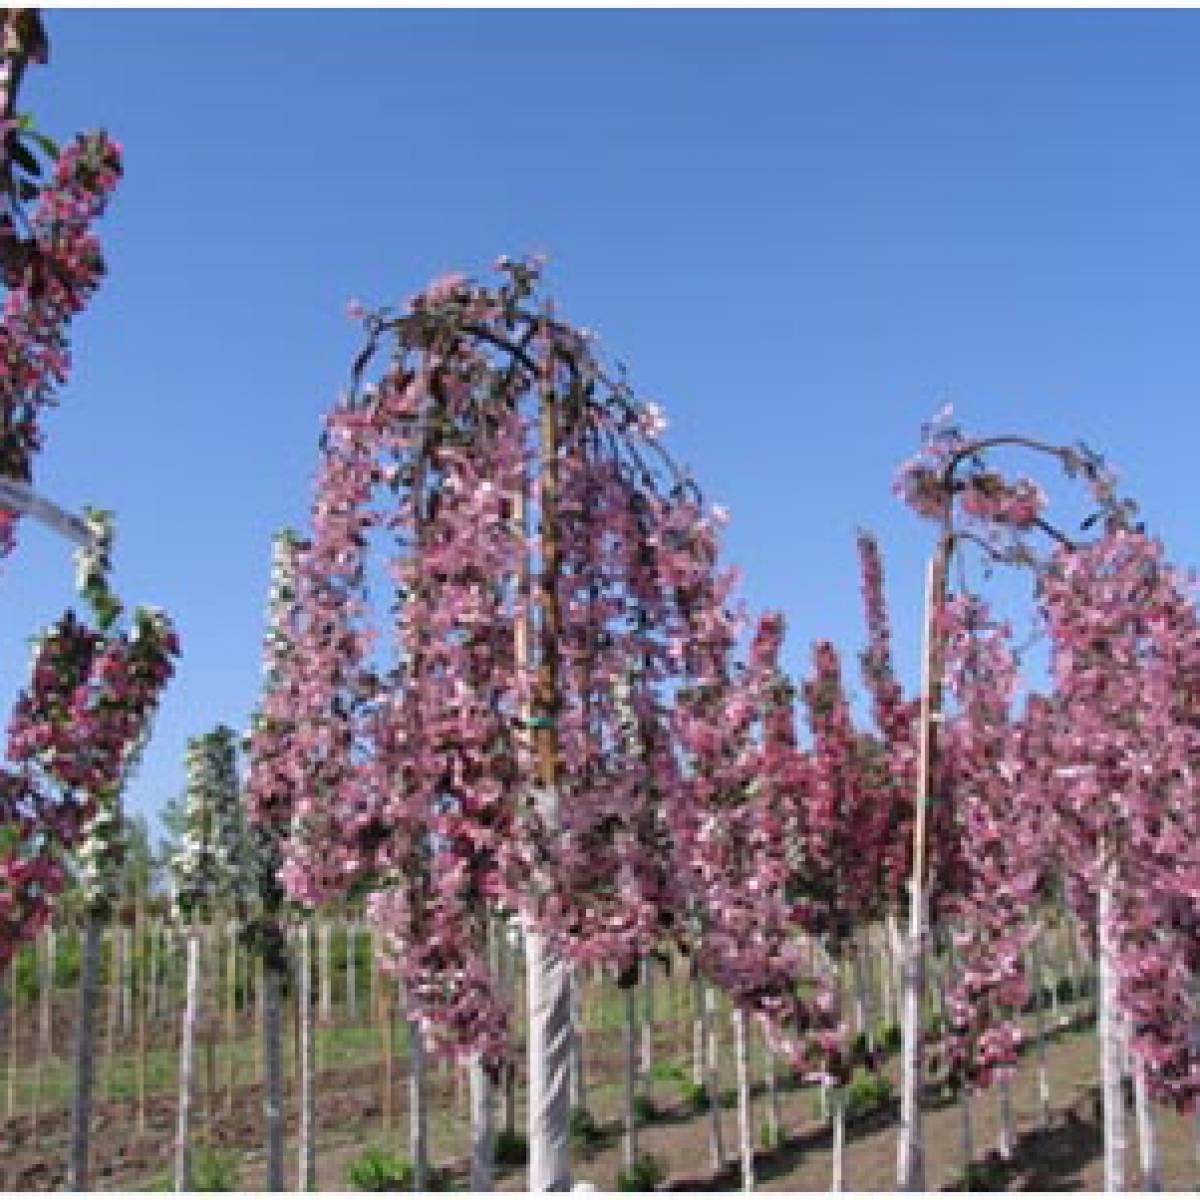 Сорт яблони флорина: ботаническое описание и характеристика, агротехника выращивания